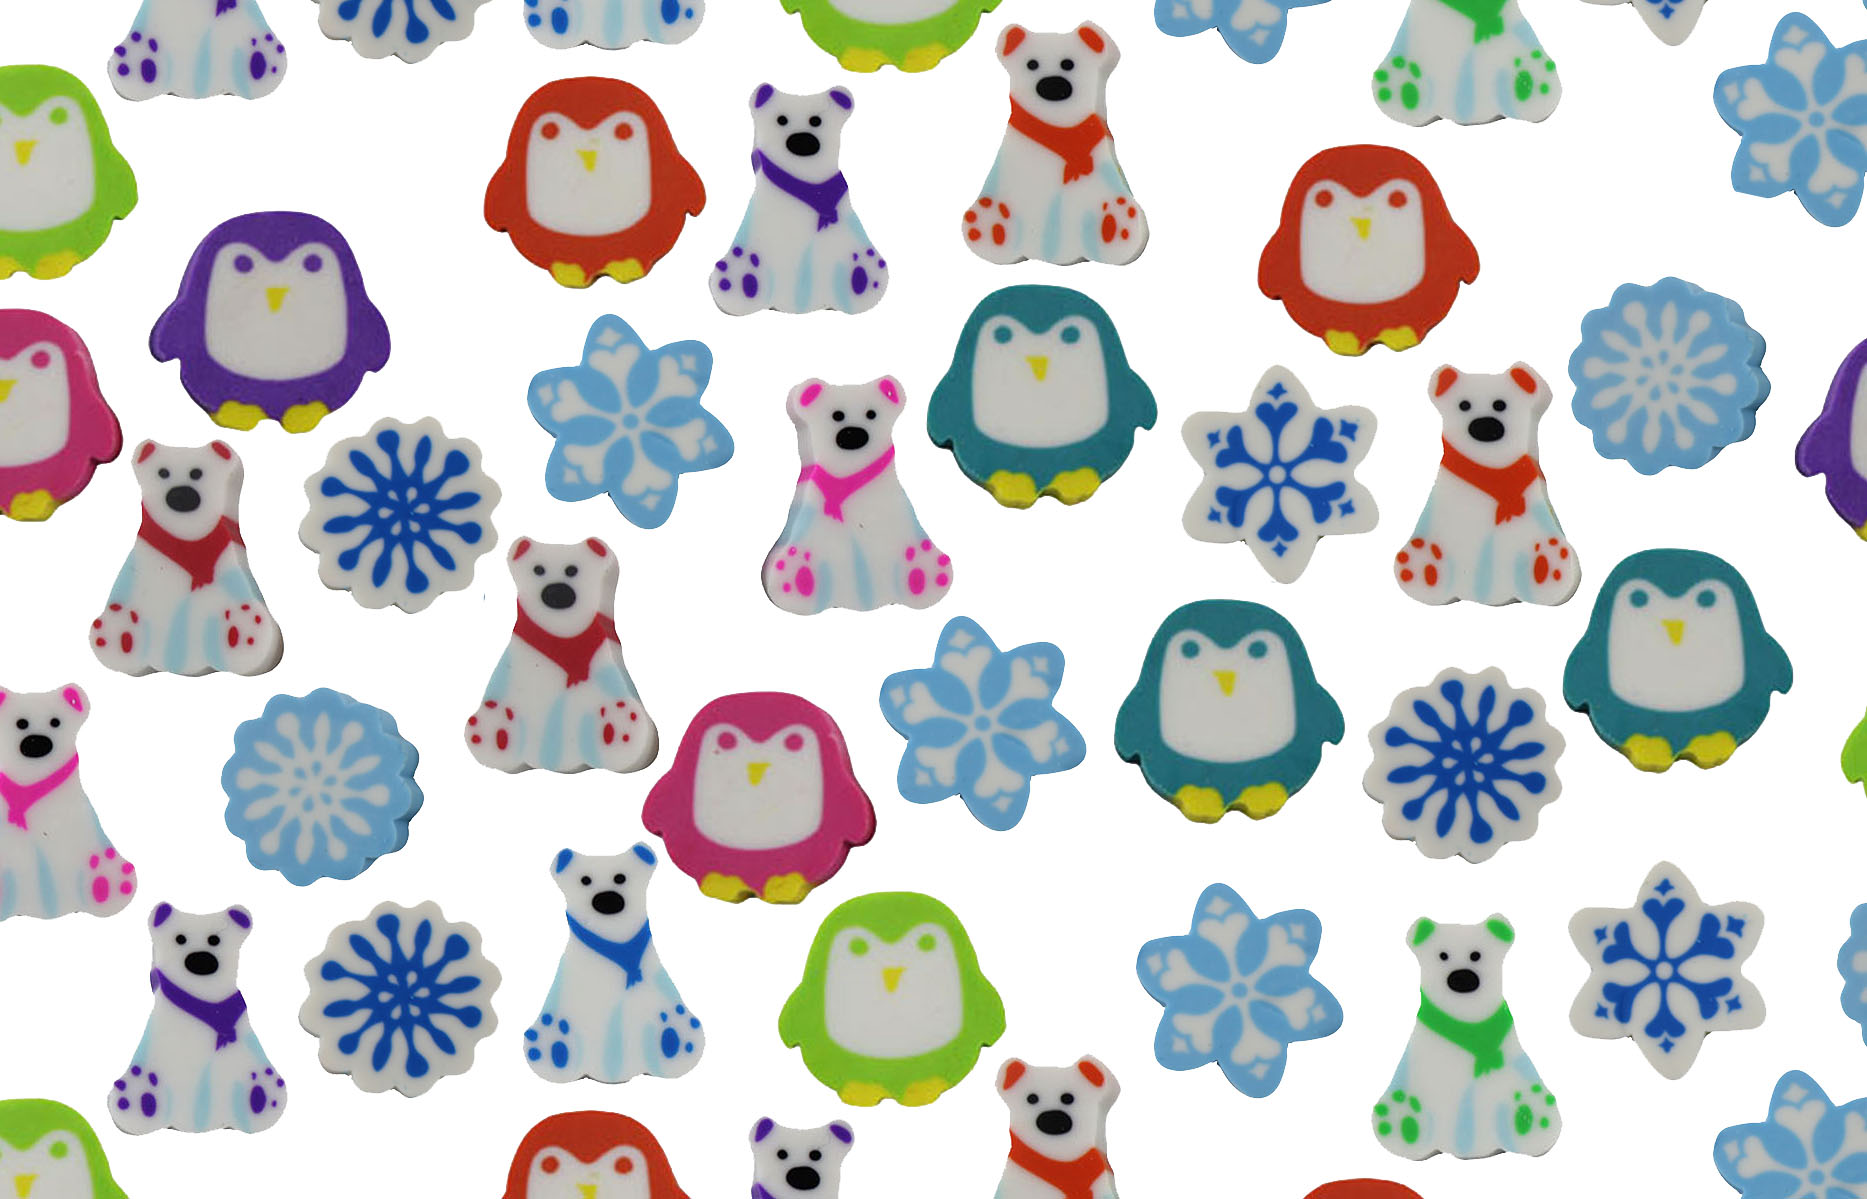 360 Winter Animal Eraser Set - Snowflake, Penguin, Polar Bear Mini Erasers  - Novelty and Functional Adorable Eraser Treasure Prize, School Classroom